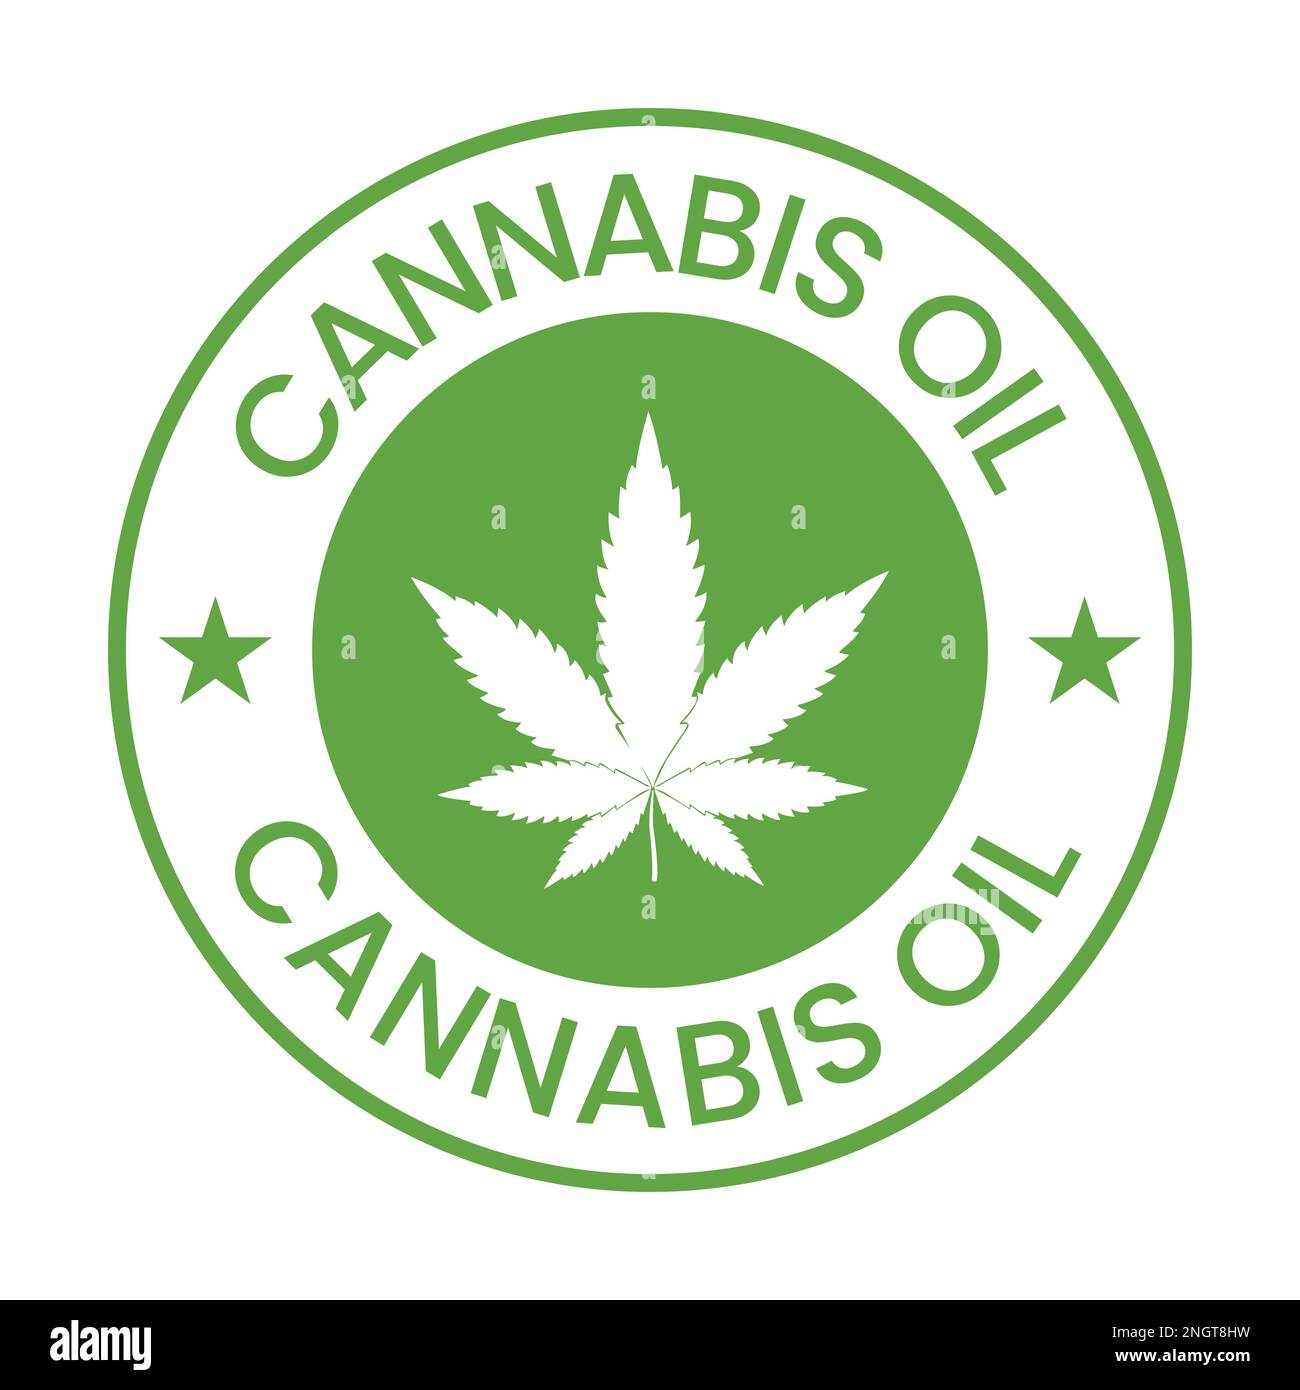 Cannabis Oil Badge Label Icon Vector, cbd oil label, hemp oil, marijuana leaf, seal icon design Stock Vector